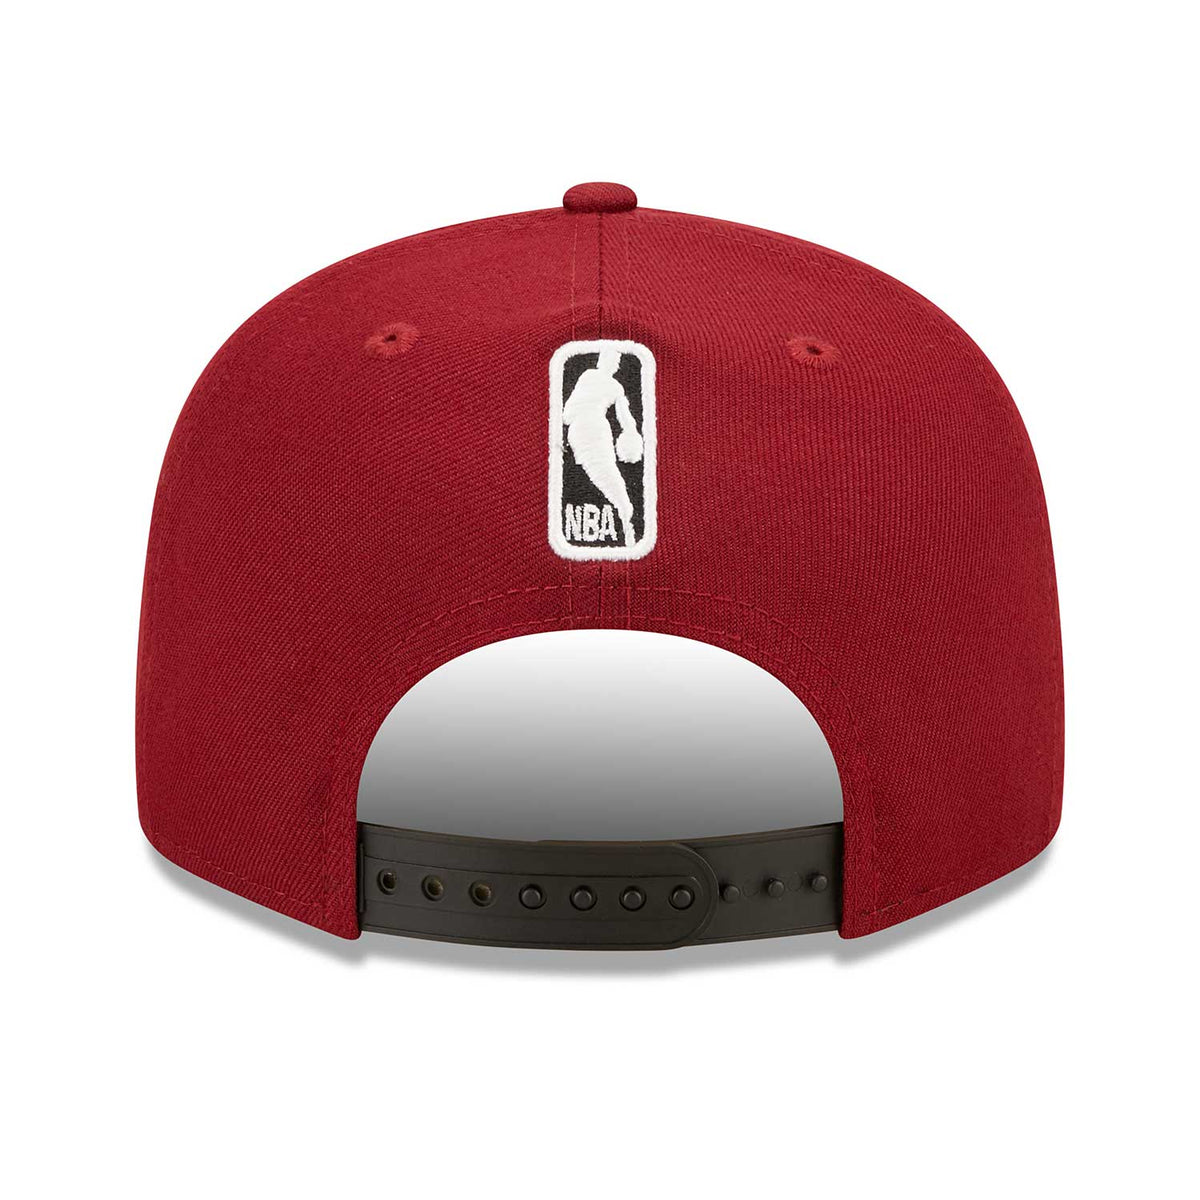 Chicago Bulls 22-23 CITY-EDITION SNAPBACK Hat by New Era